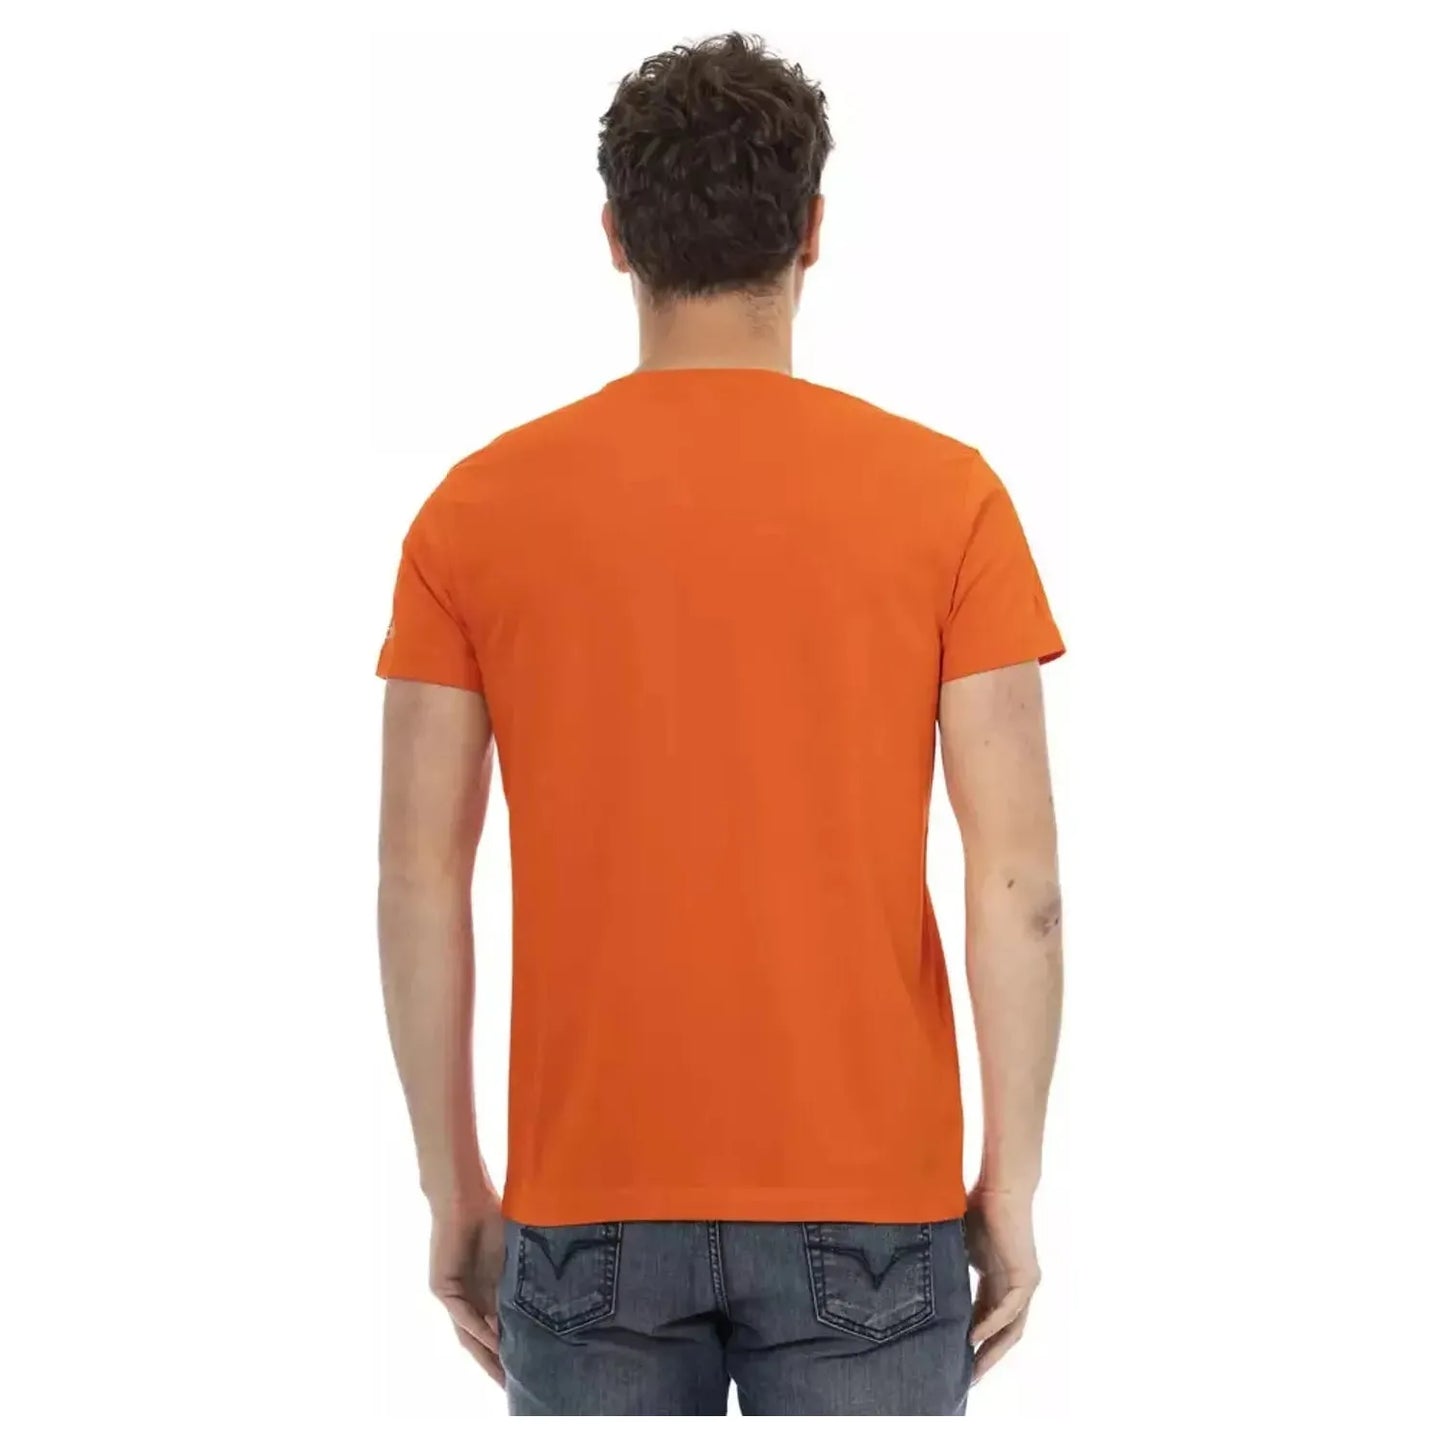 Trussardi Action Sunset Hue Cotton Blend Tee orange-cotton-t-shirt-24